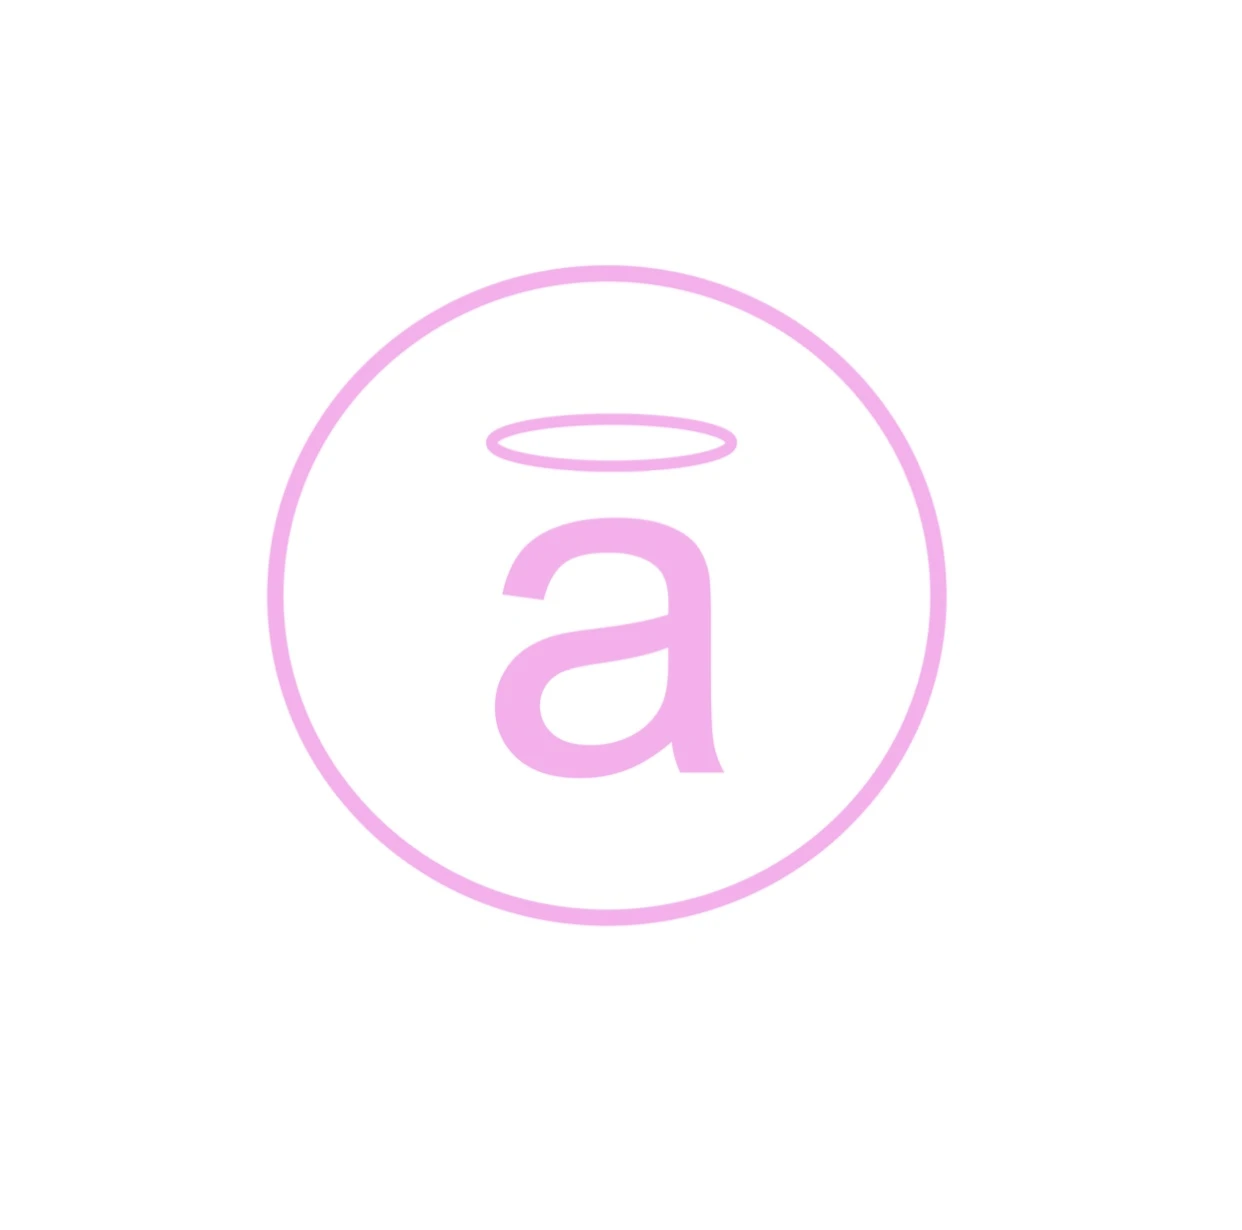 The Angel Shoppe logo